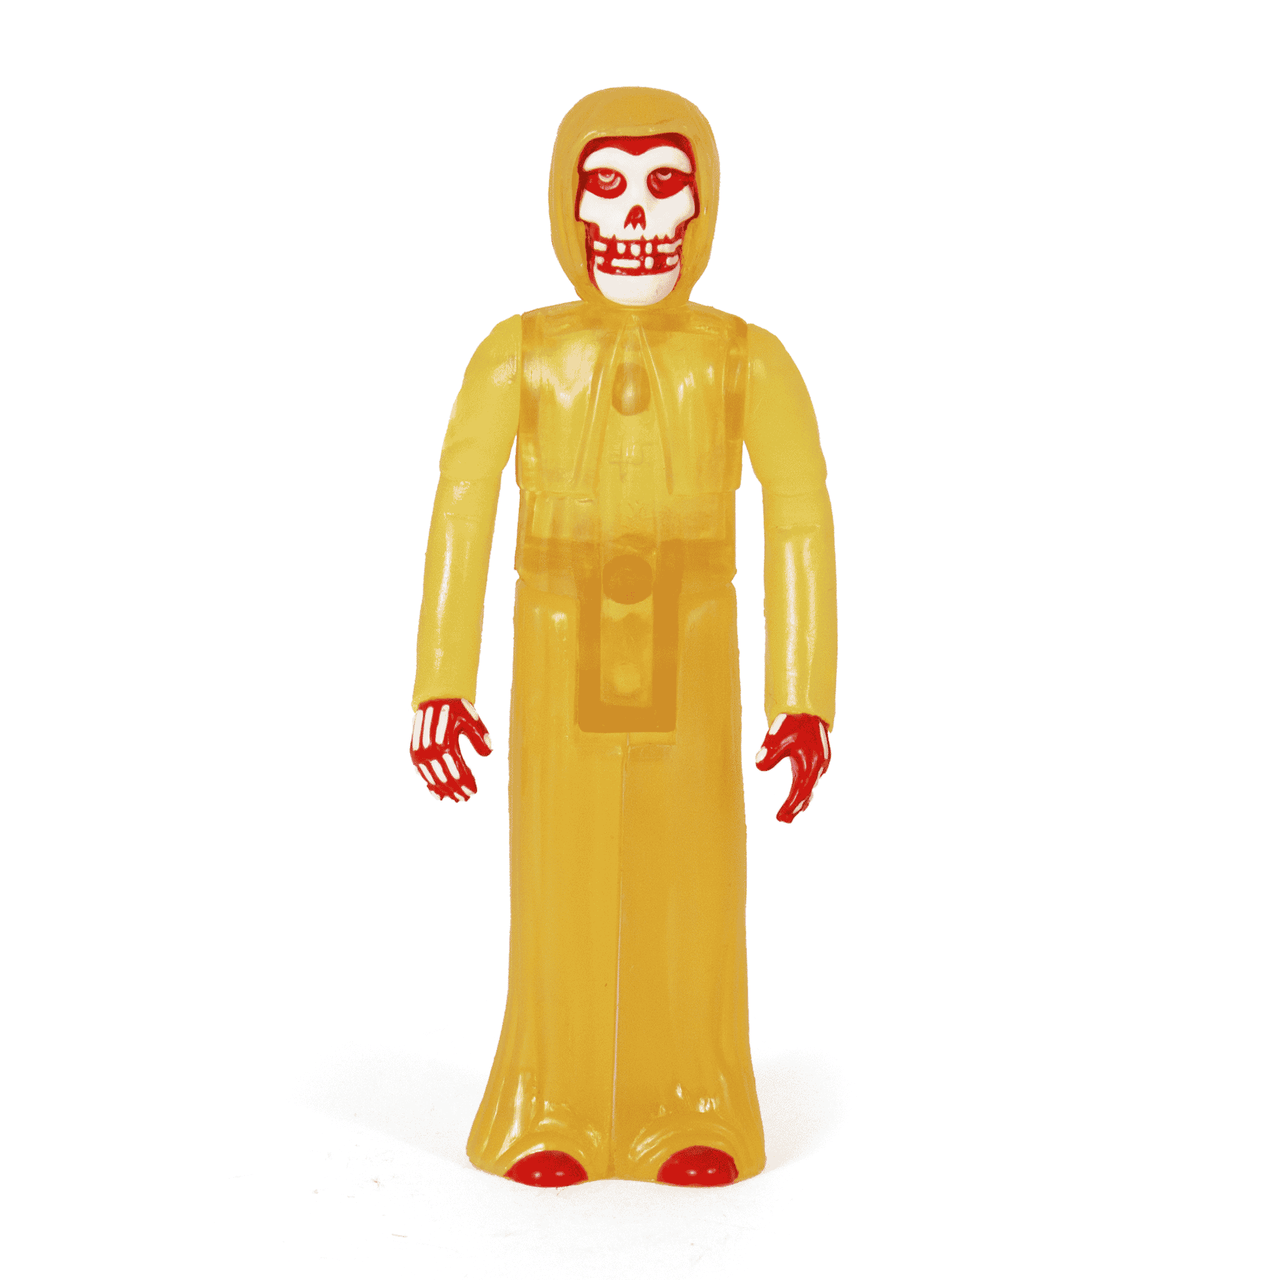 Misfits Horror Business Fiend Figurine by Super7